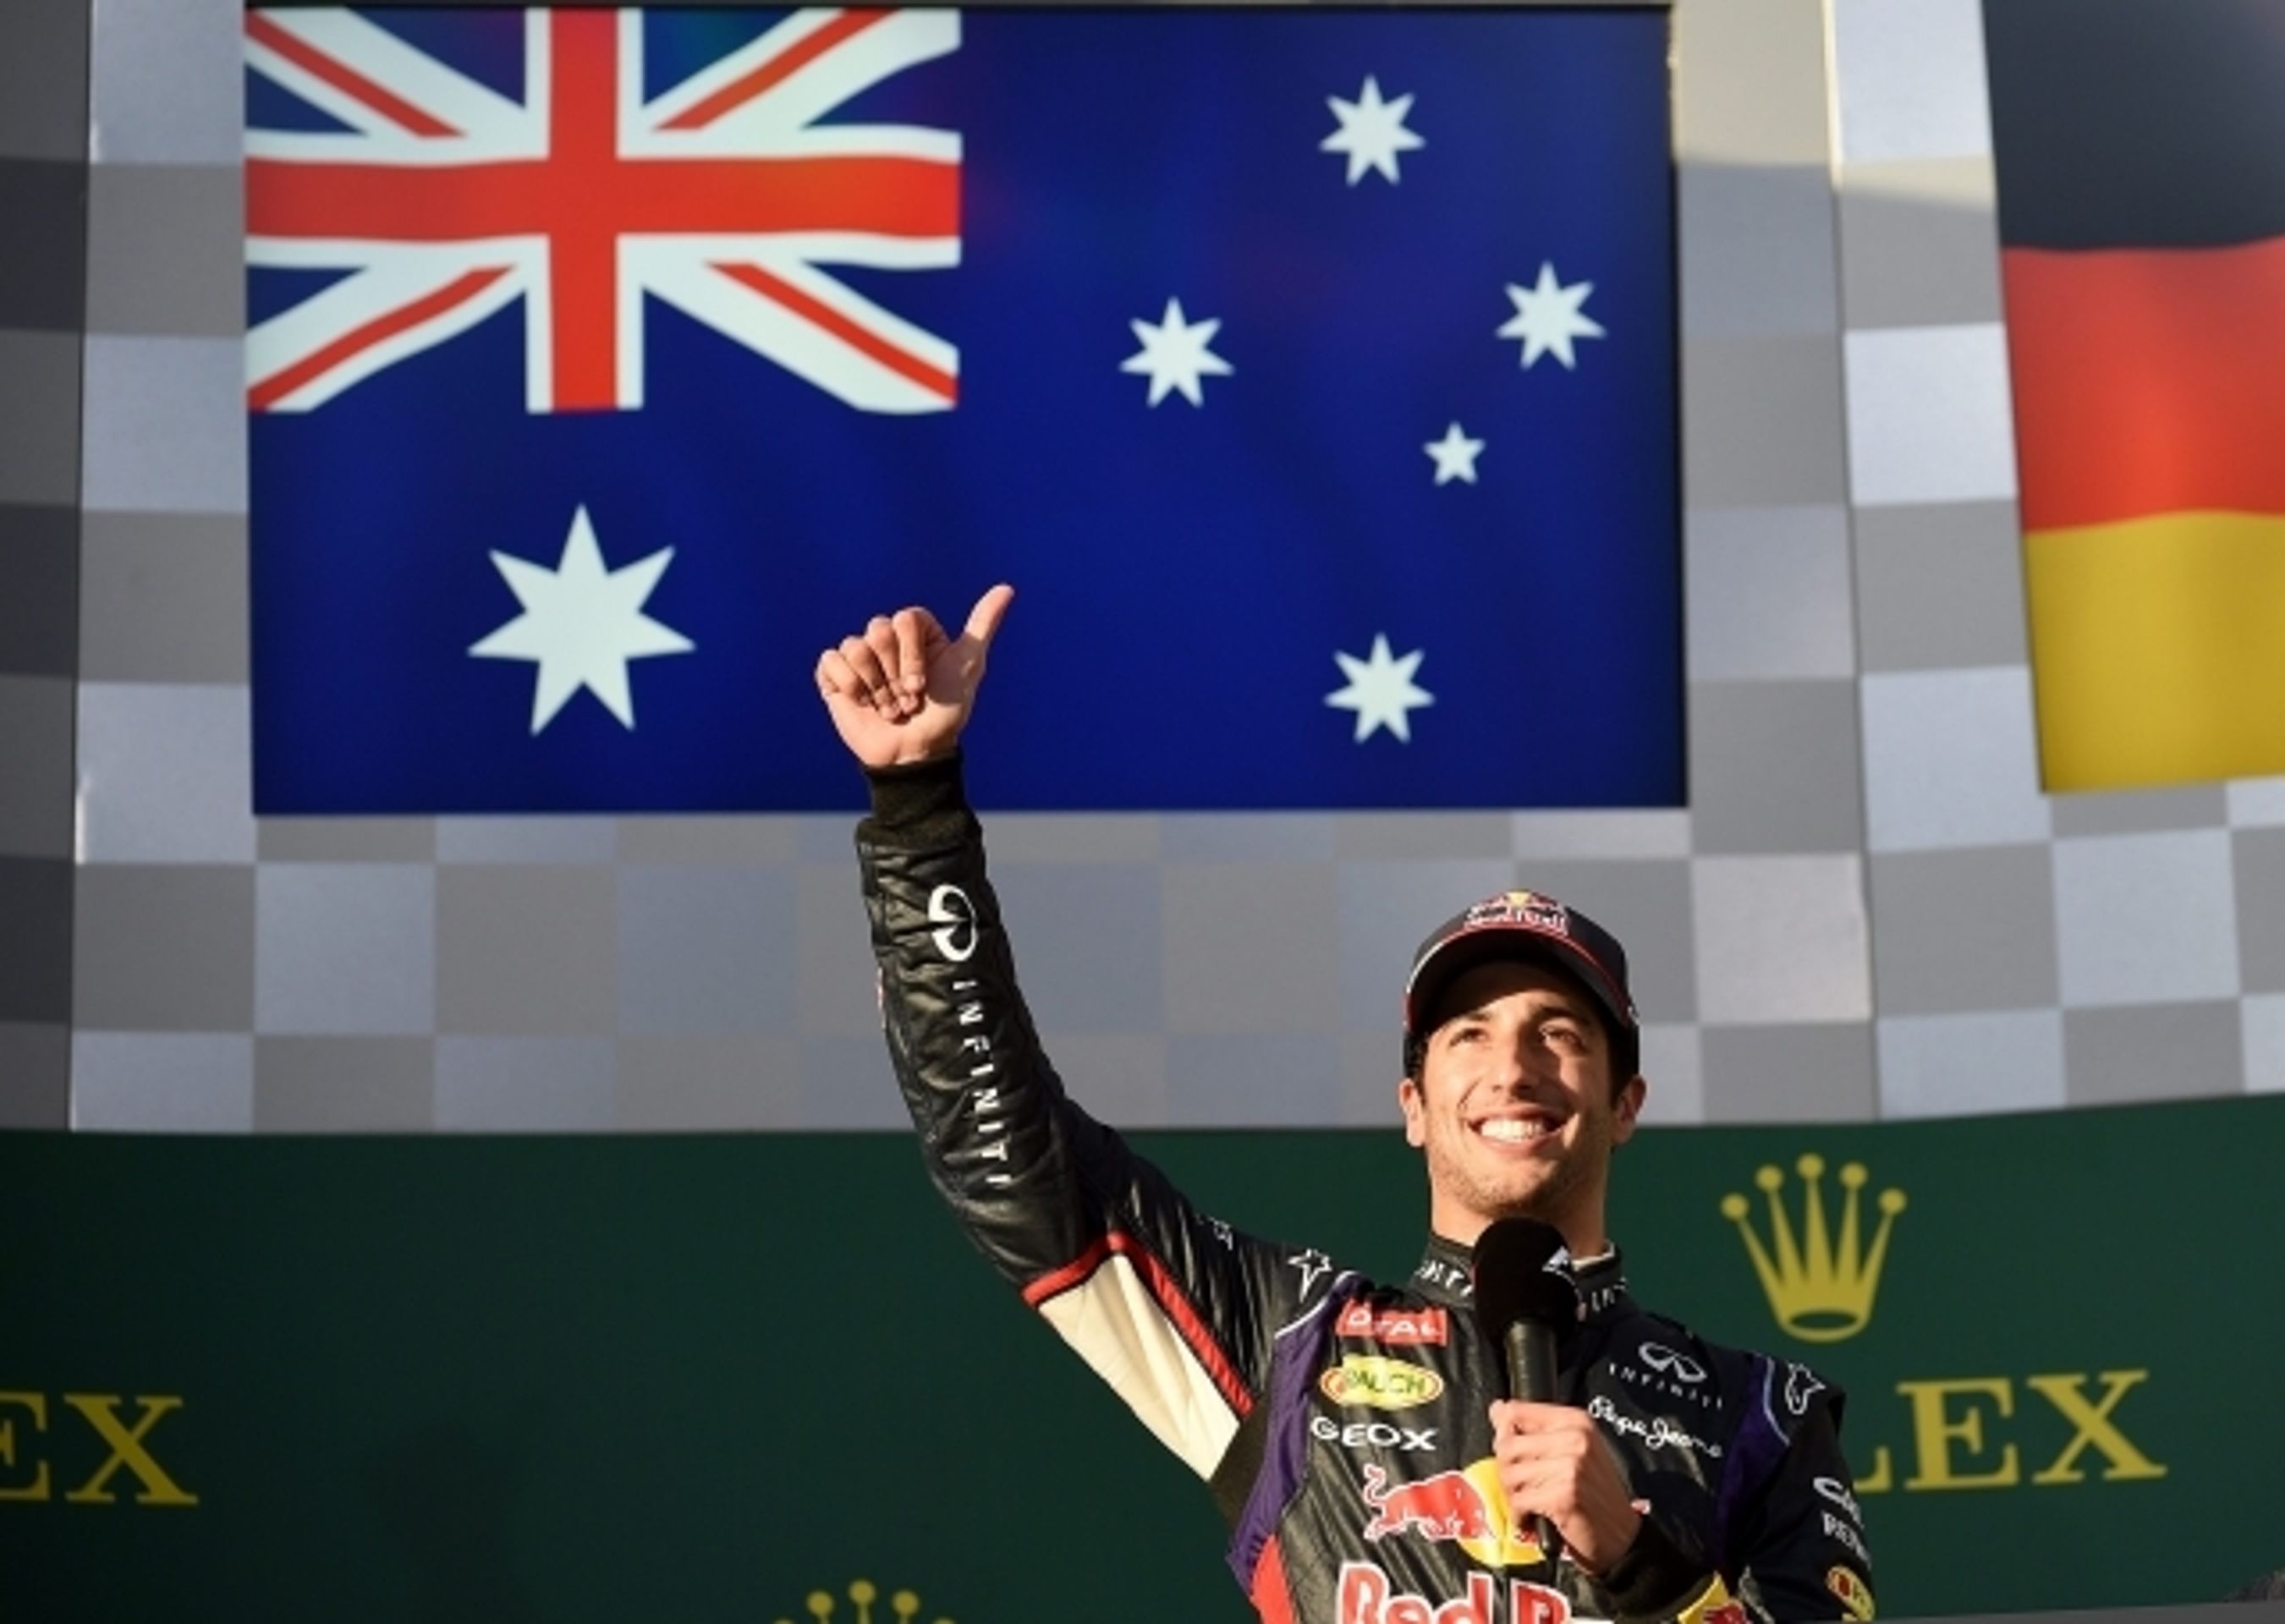 Velká cena Austrálie, Rosberg, Ricciardo, Magnussen - 6 - GALERIE: Rosberg ovládl Velkou cenu Austrálie, domácí Ricciardo byl druhý (1/10)